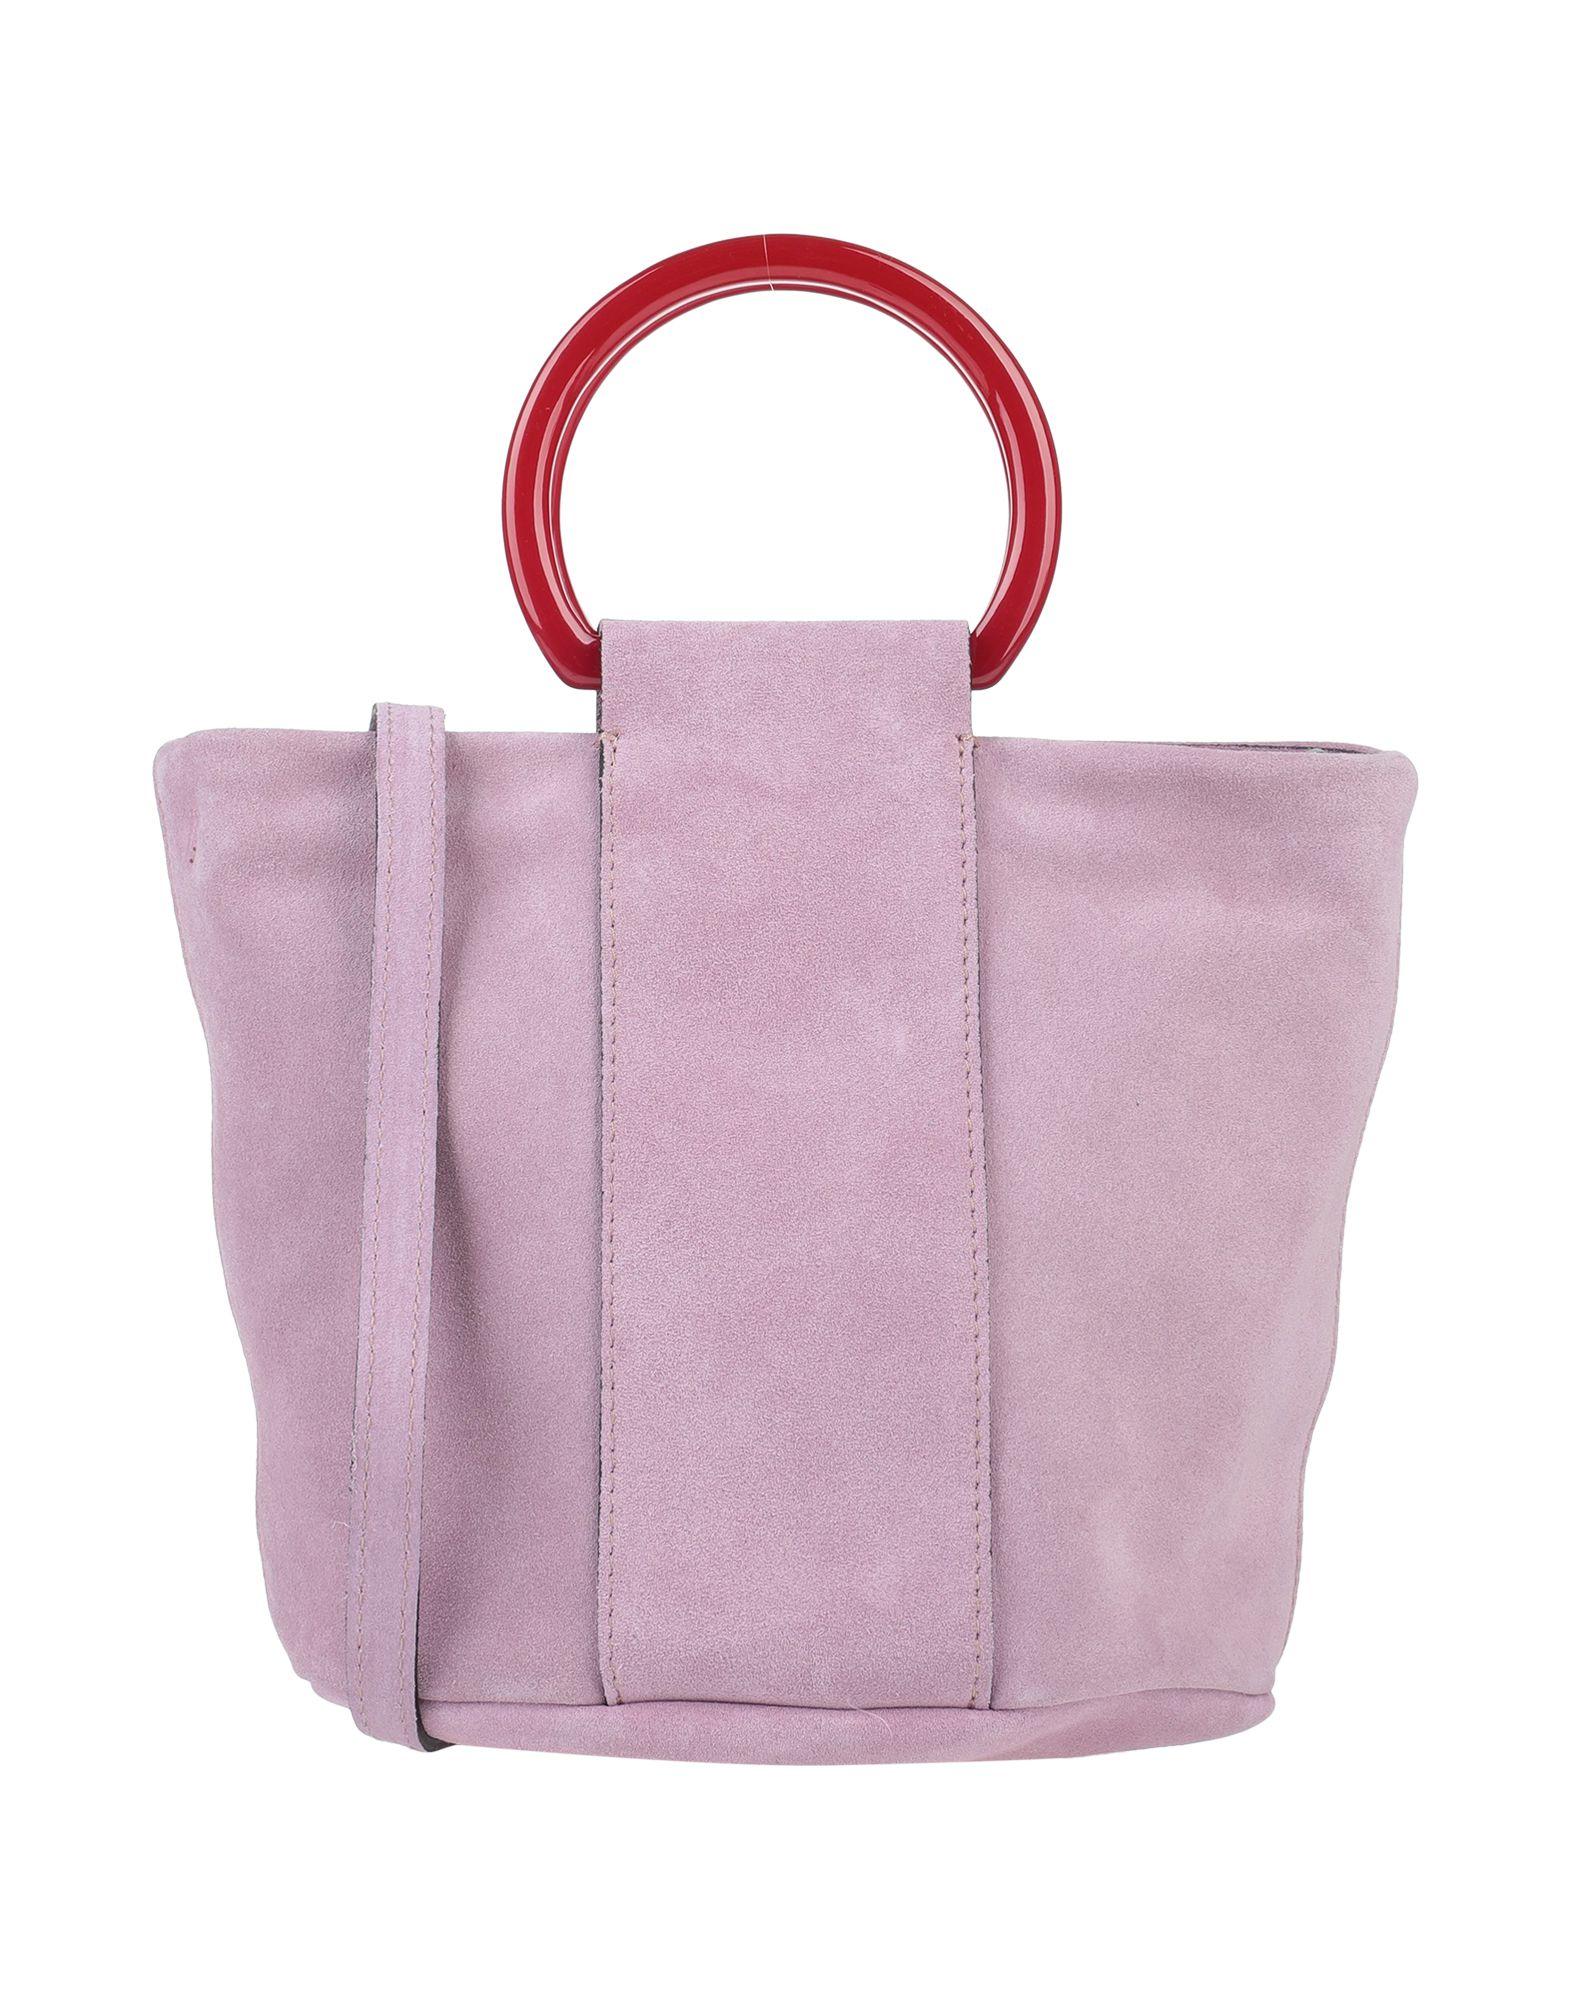 Gianni Chiarini Leather Handbag in Mauve (Purple) - Lyst